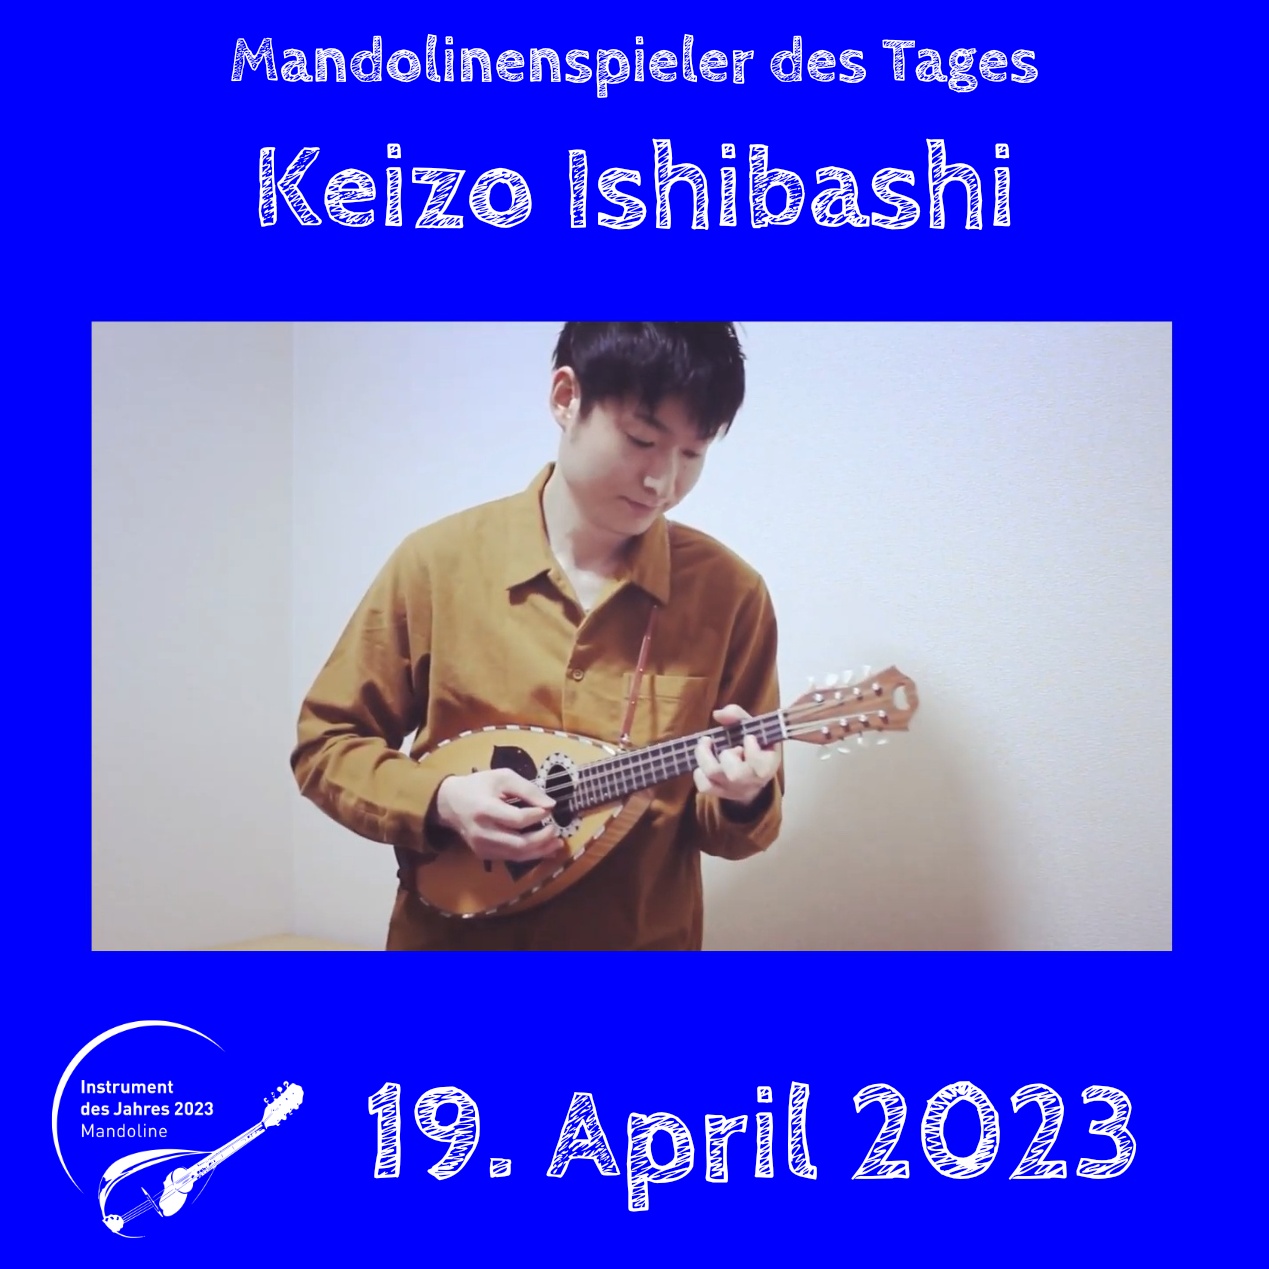 Keizo Ishibashi Instrument des Jahres 2023 Mandolinenspieler Mandolinenspielerin des Tages